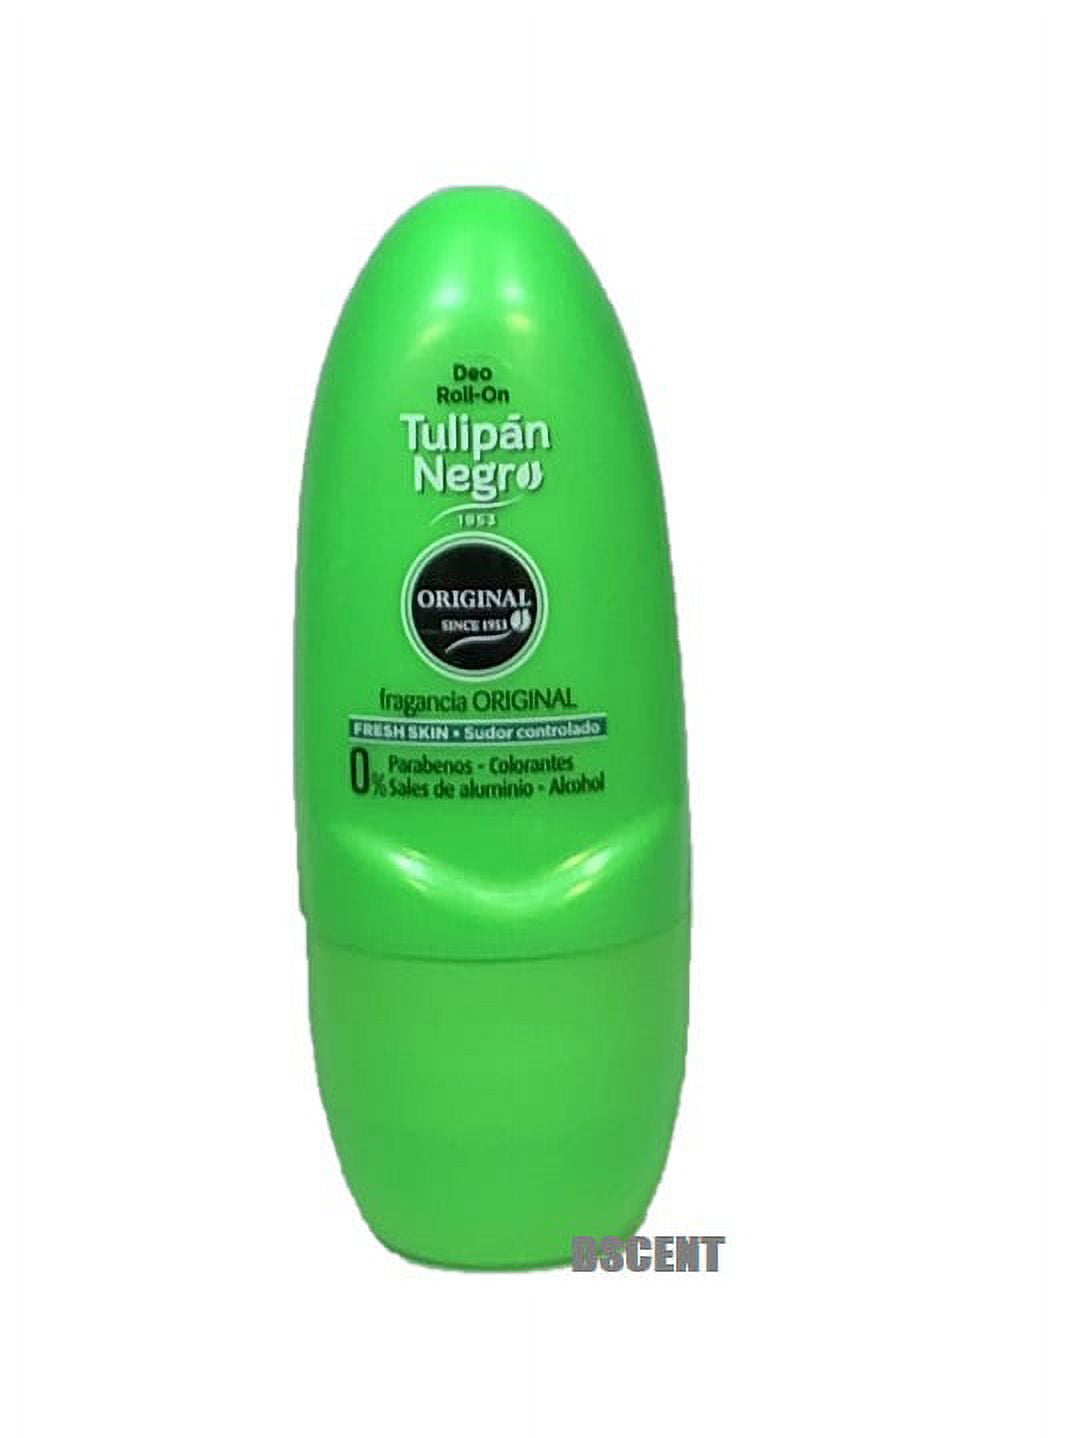 Tulipan Negro Roll-On Deodorant Fresh Skin Fragrance Free Controls Sweat 